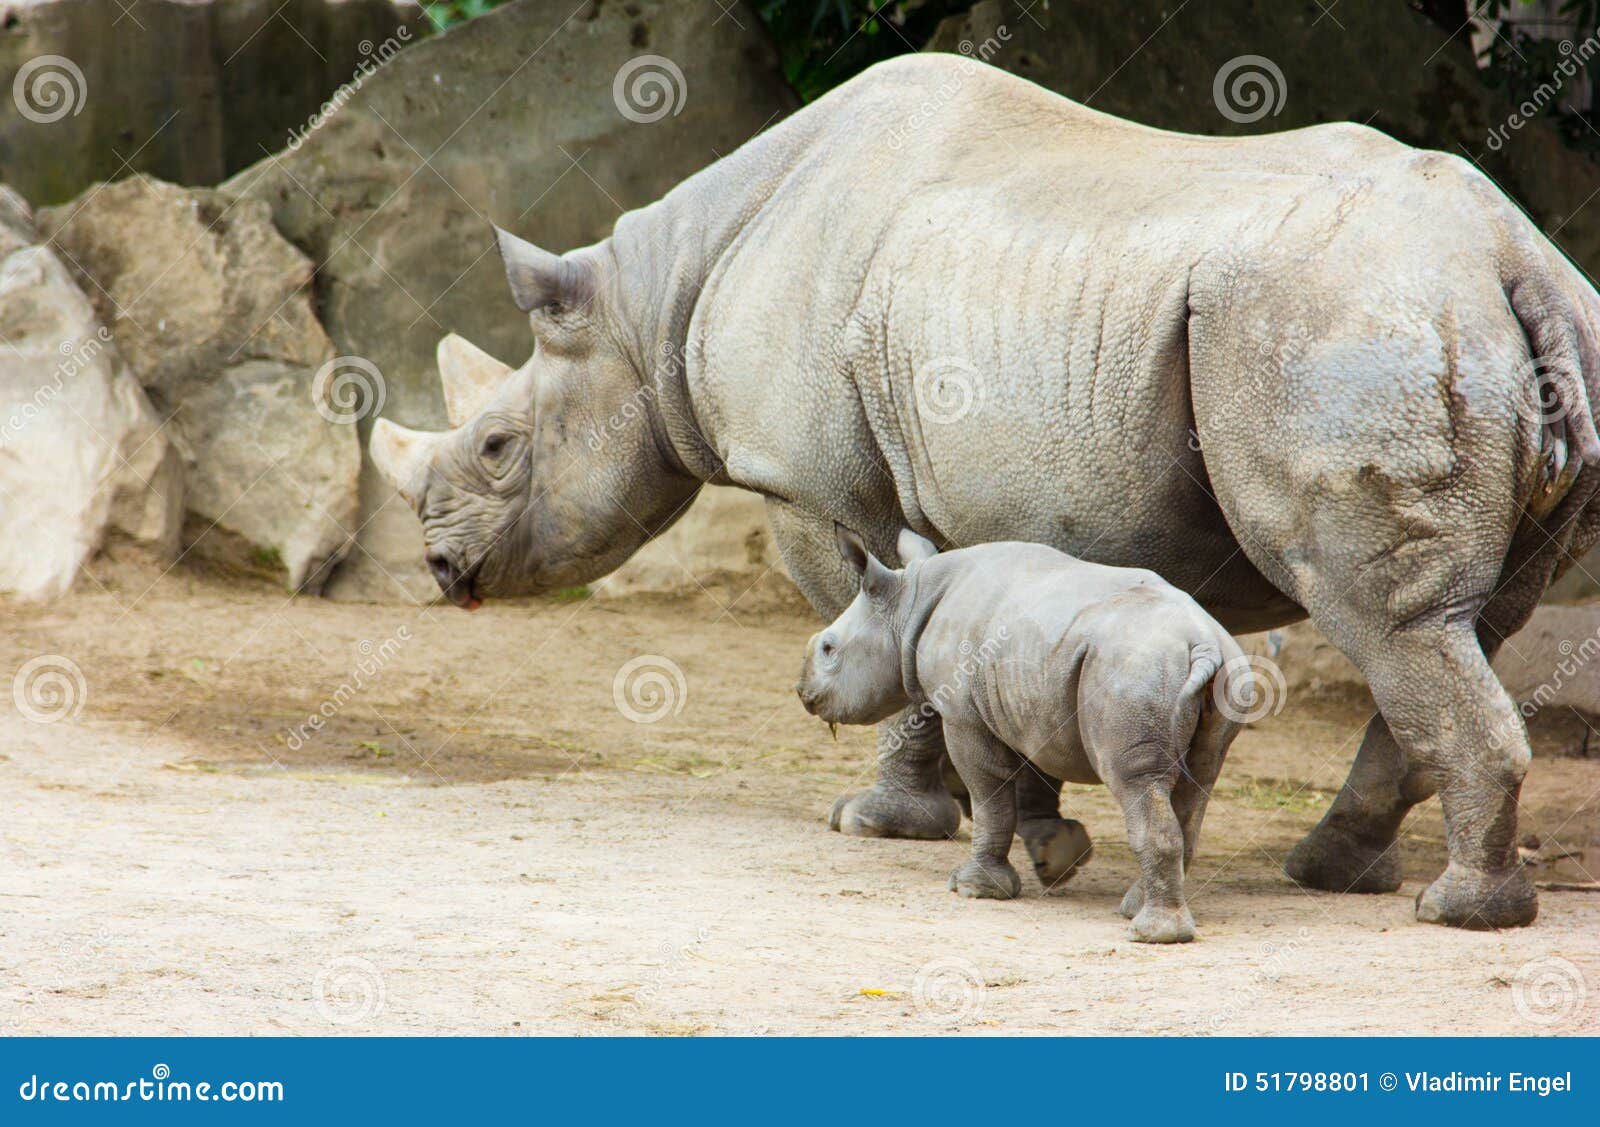 Rhino Rhinoceros Animal Baby Zoo Animals Take Care of Babies Stock Image -  Image of hard, giant: 51798801